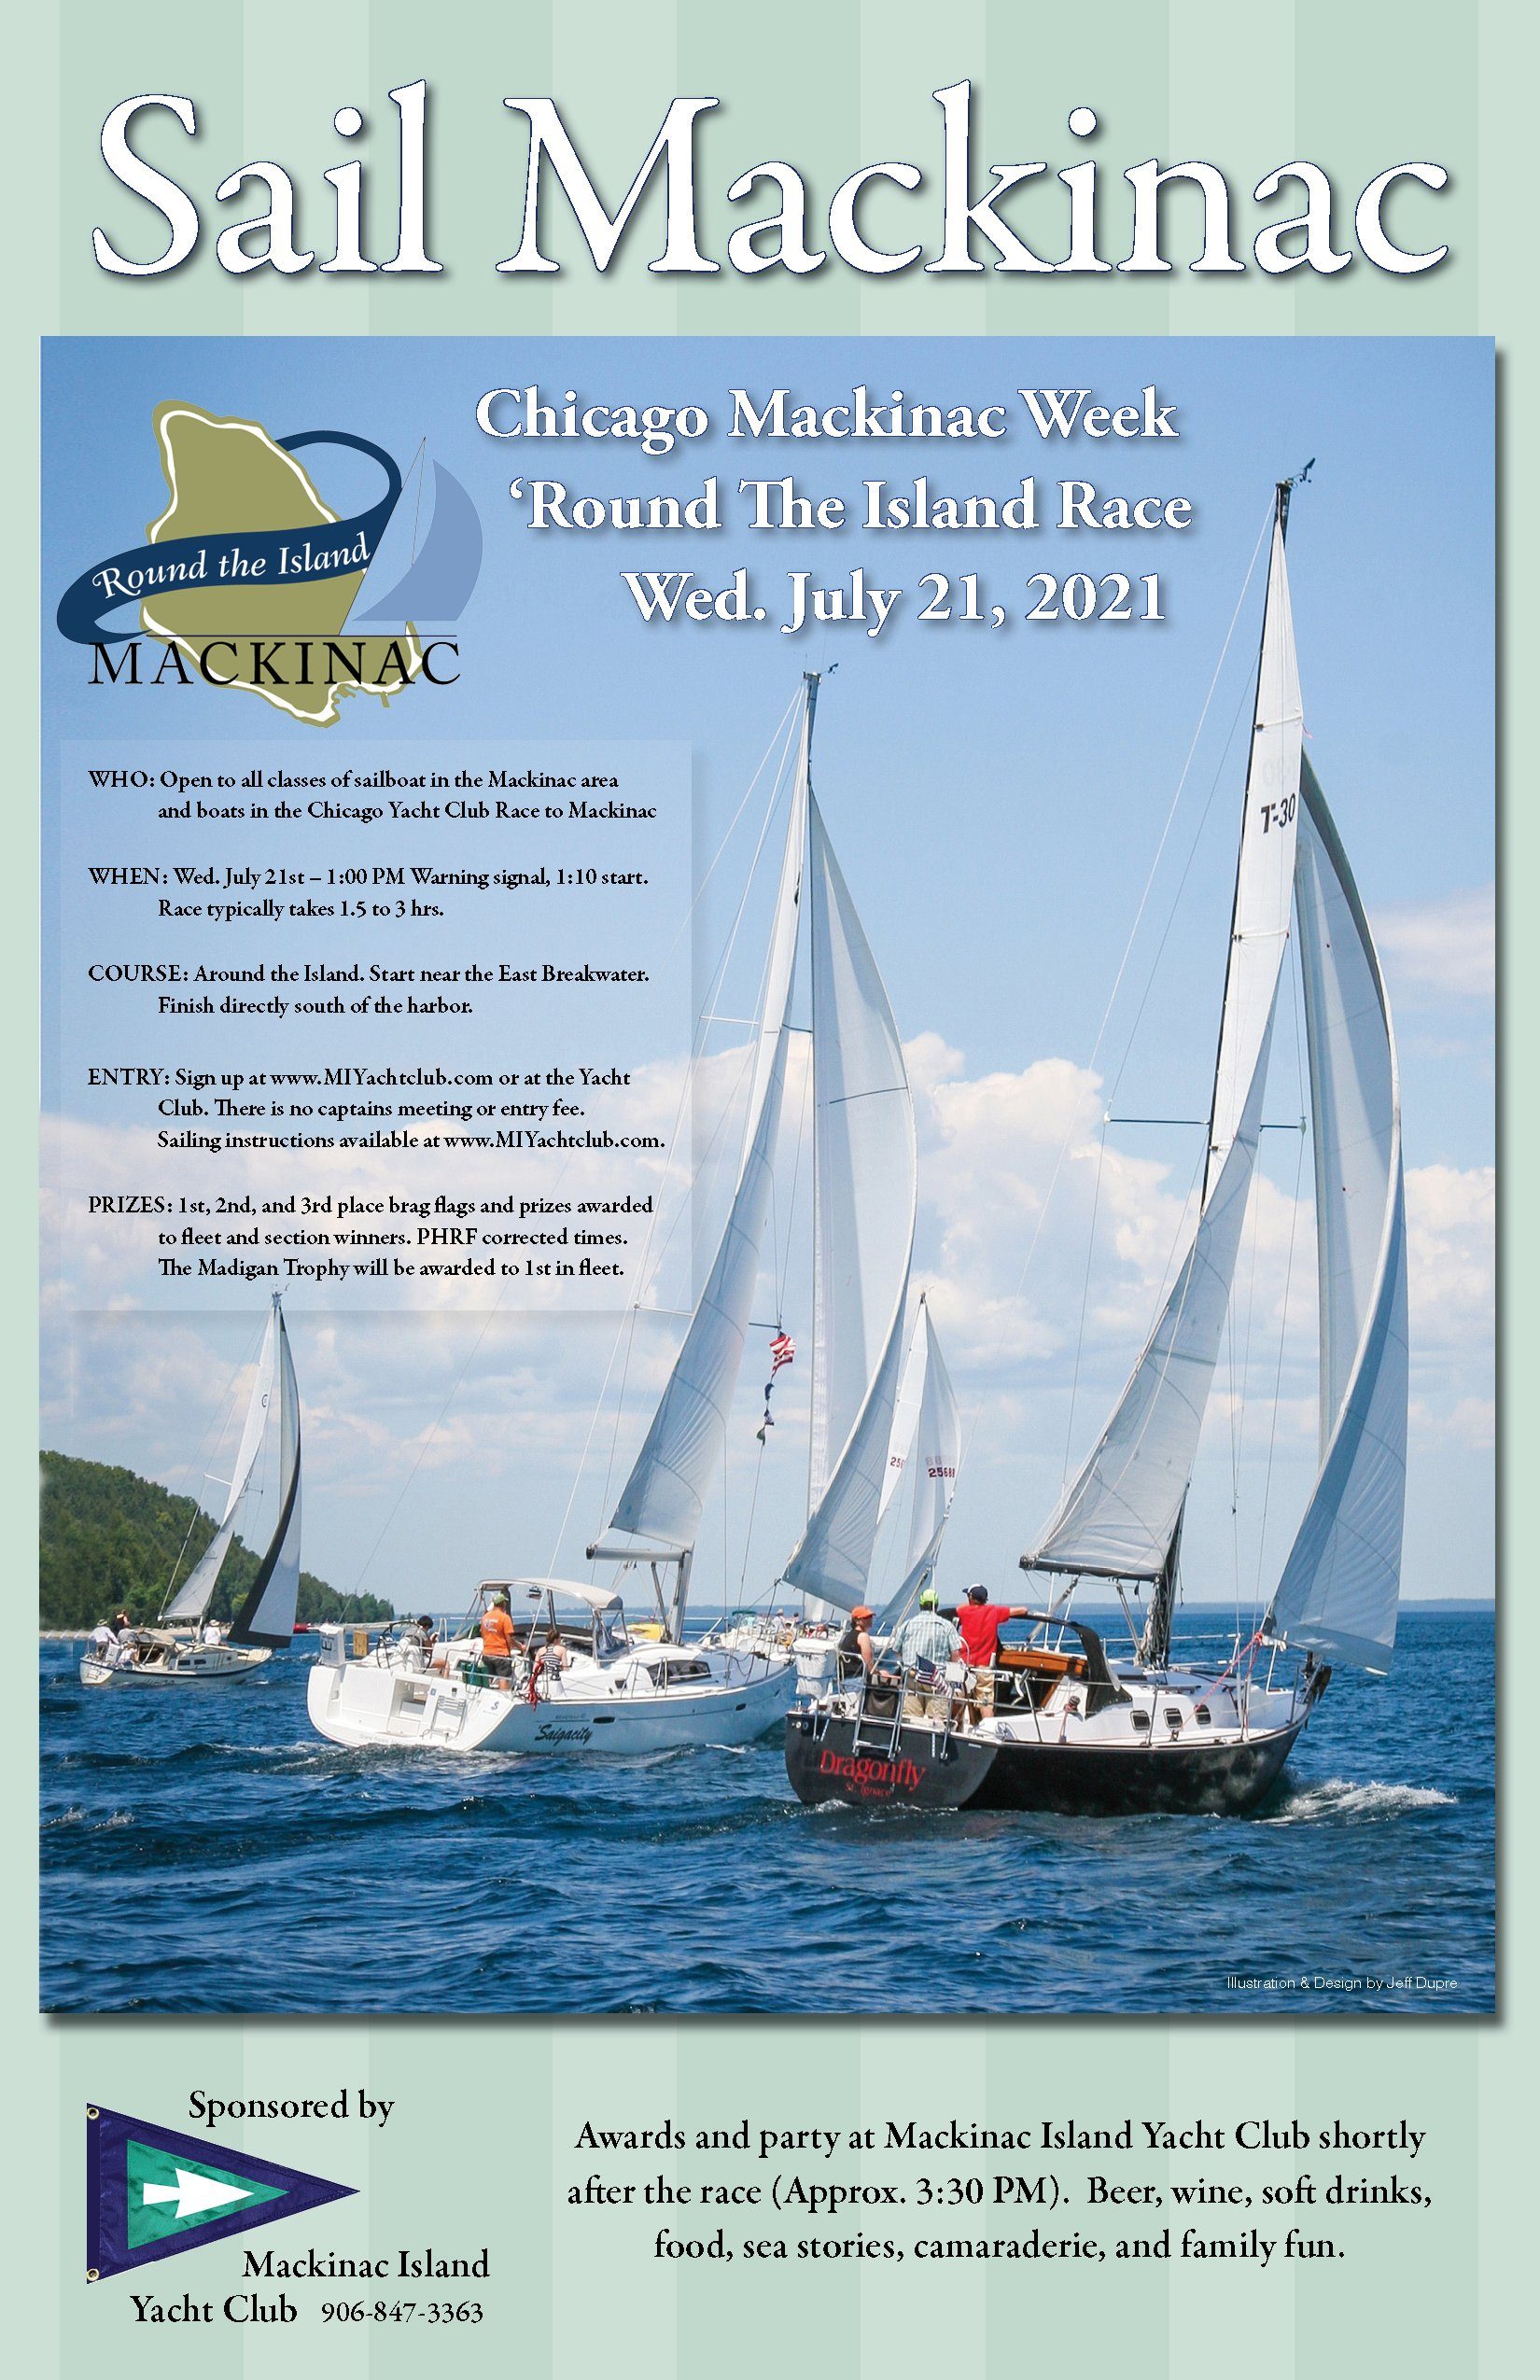 Sail Mackinac Chicago Mac Week Round the Island Race Mackinac